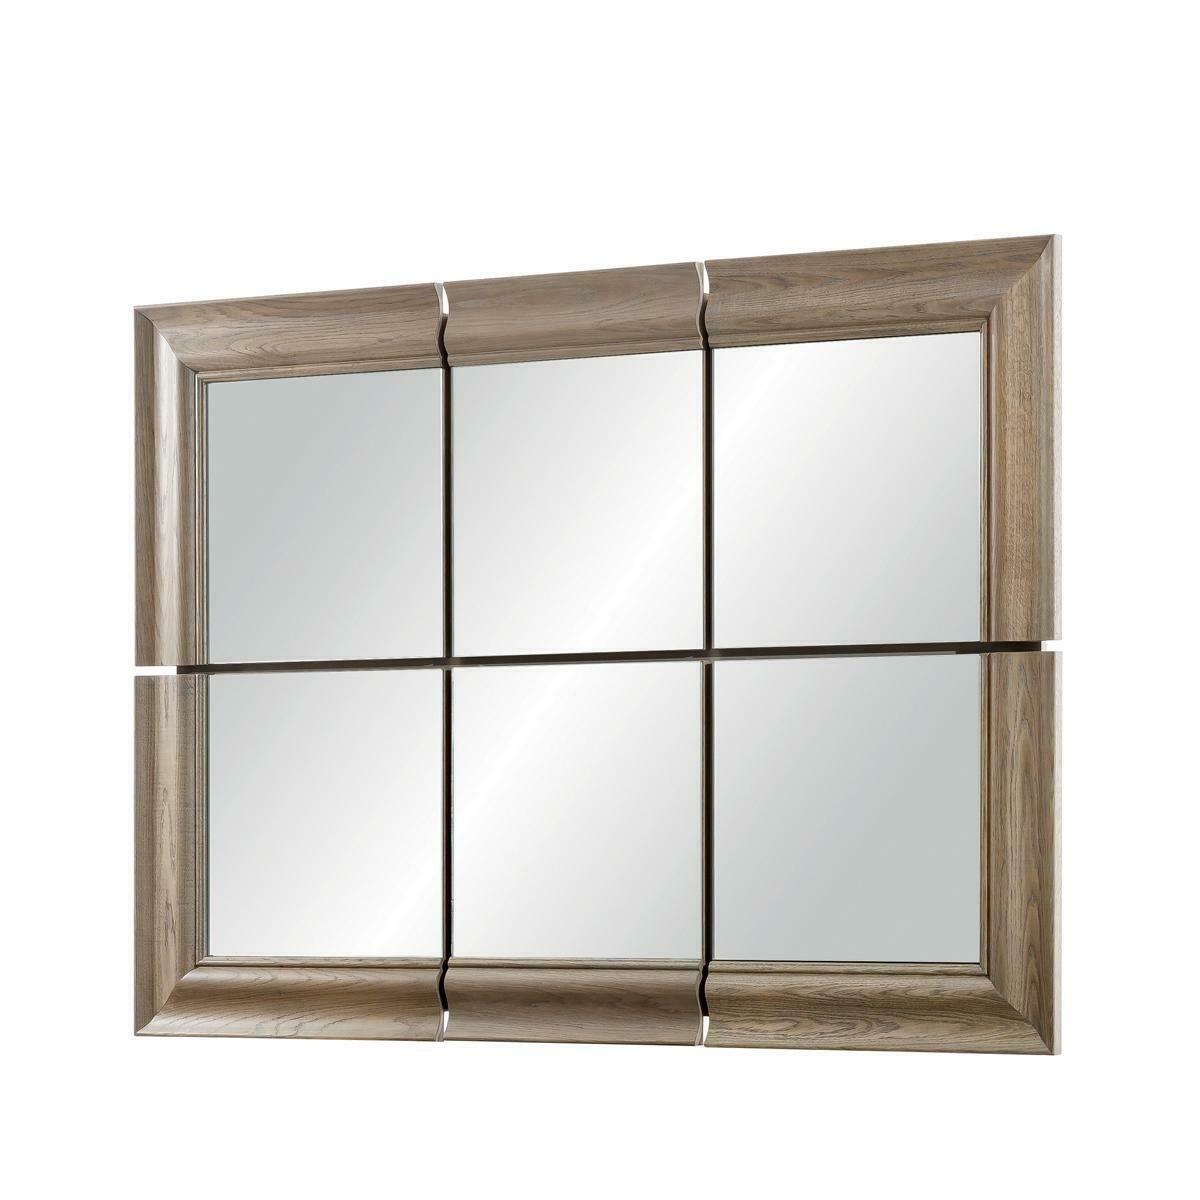 Moderner Großer Spiegel Wandspiegel Echt Holz Rahmen Hängespiegel